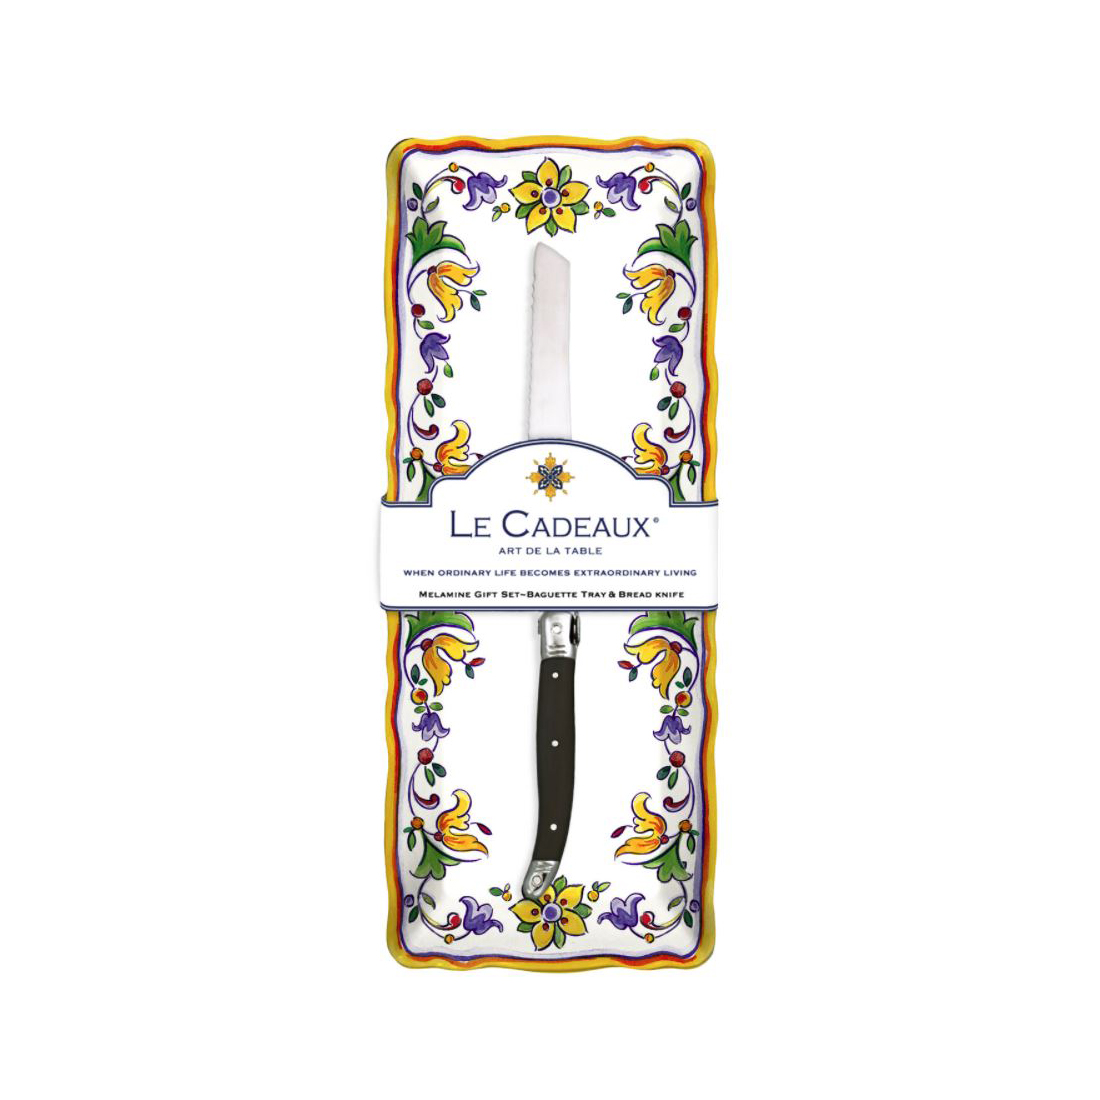 Capri Baguette Knife and Tray Gift Set